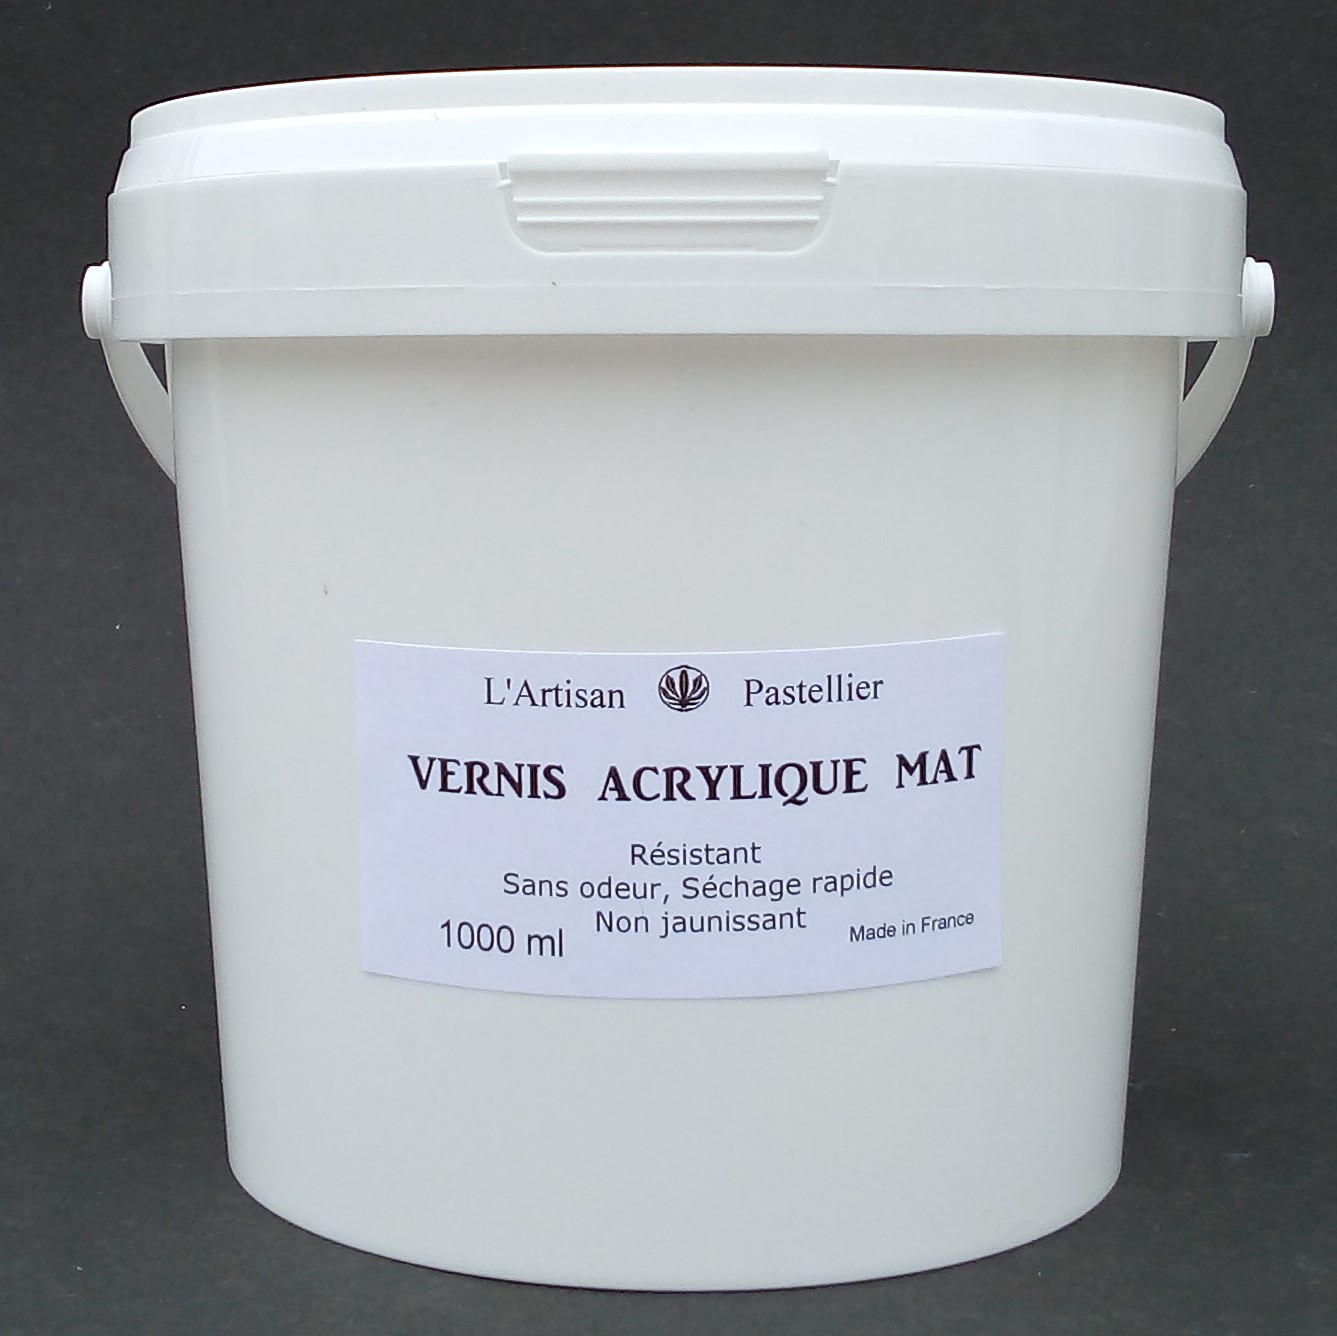 Vernis Acrylique Mat 115 Flacon 75 ml